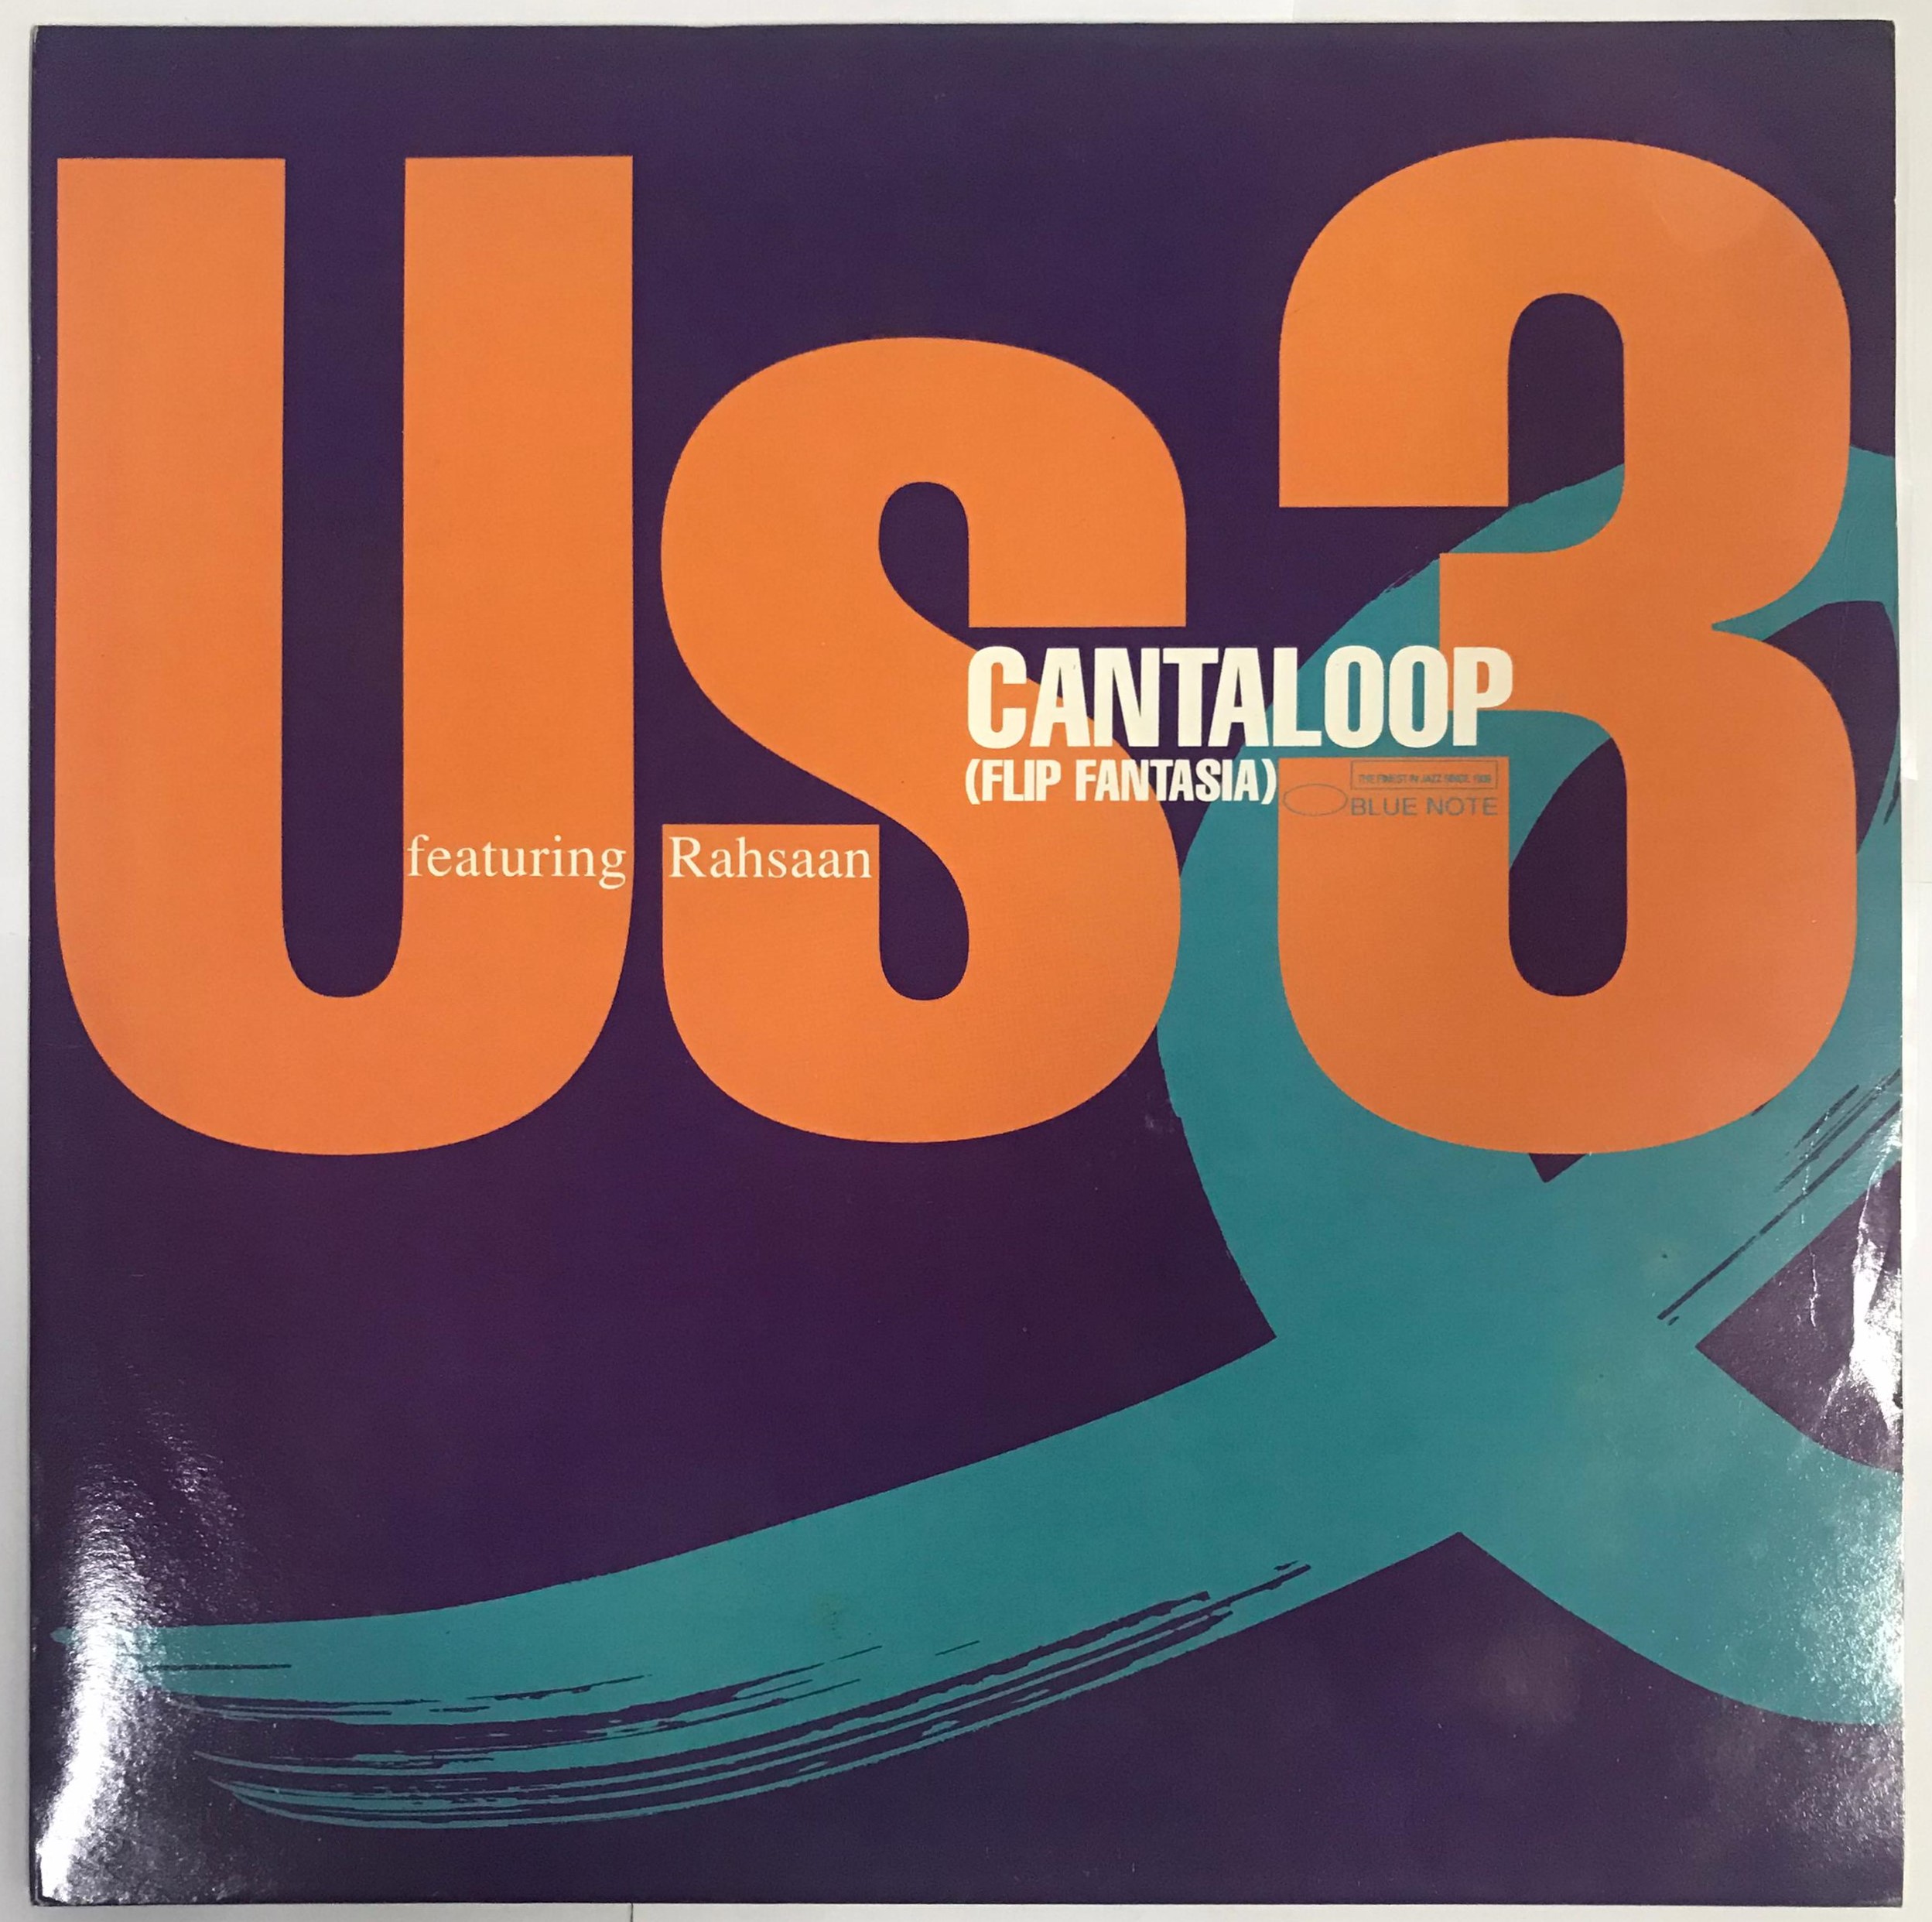 Us3 Featuring Rahsaan - Cantaloop (Flip Fantasia) Vinyl